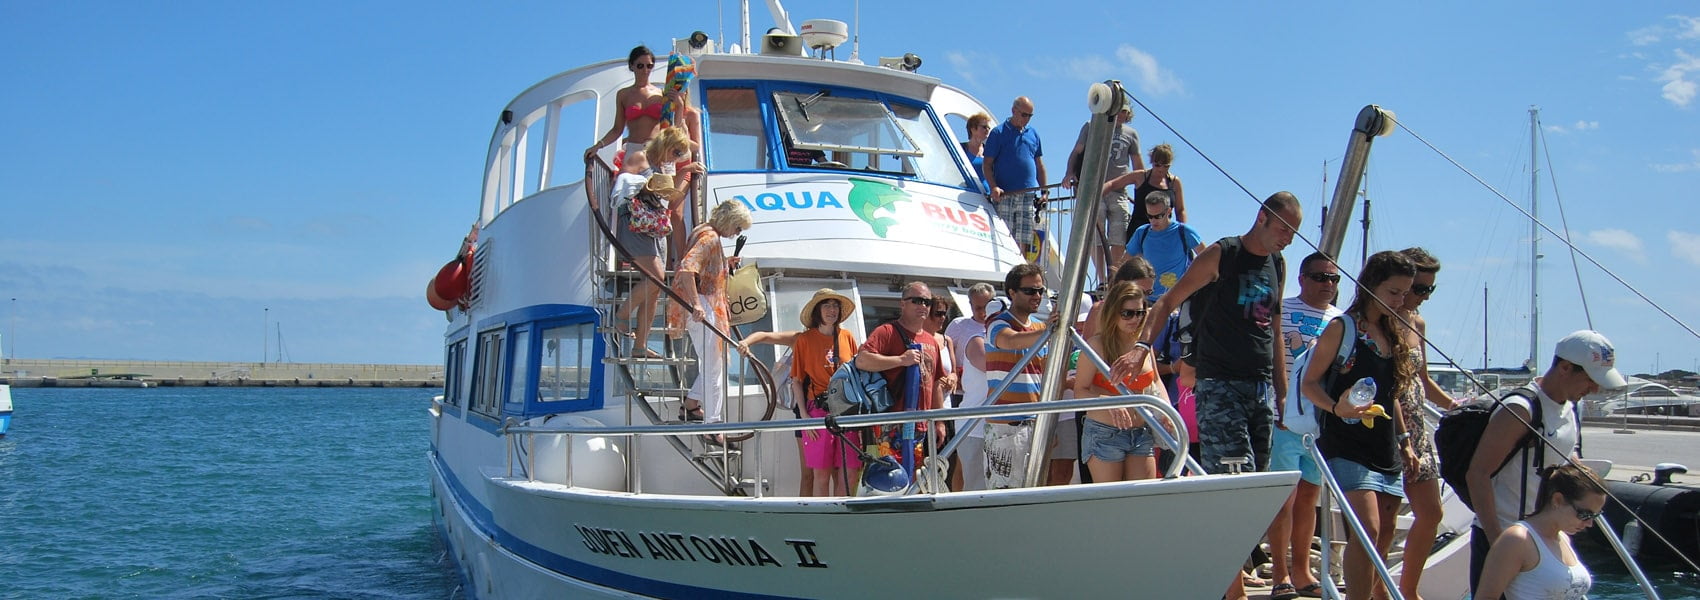 Aquabus ferry Ibiza